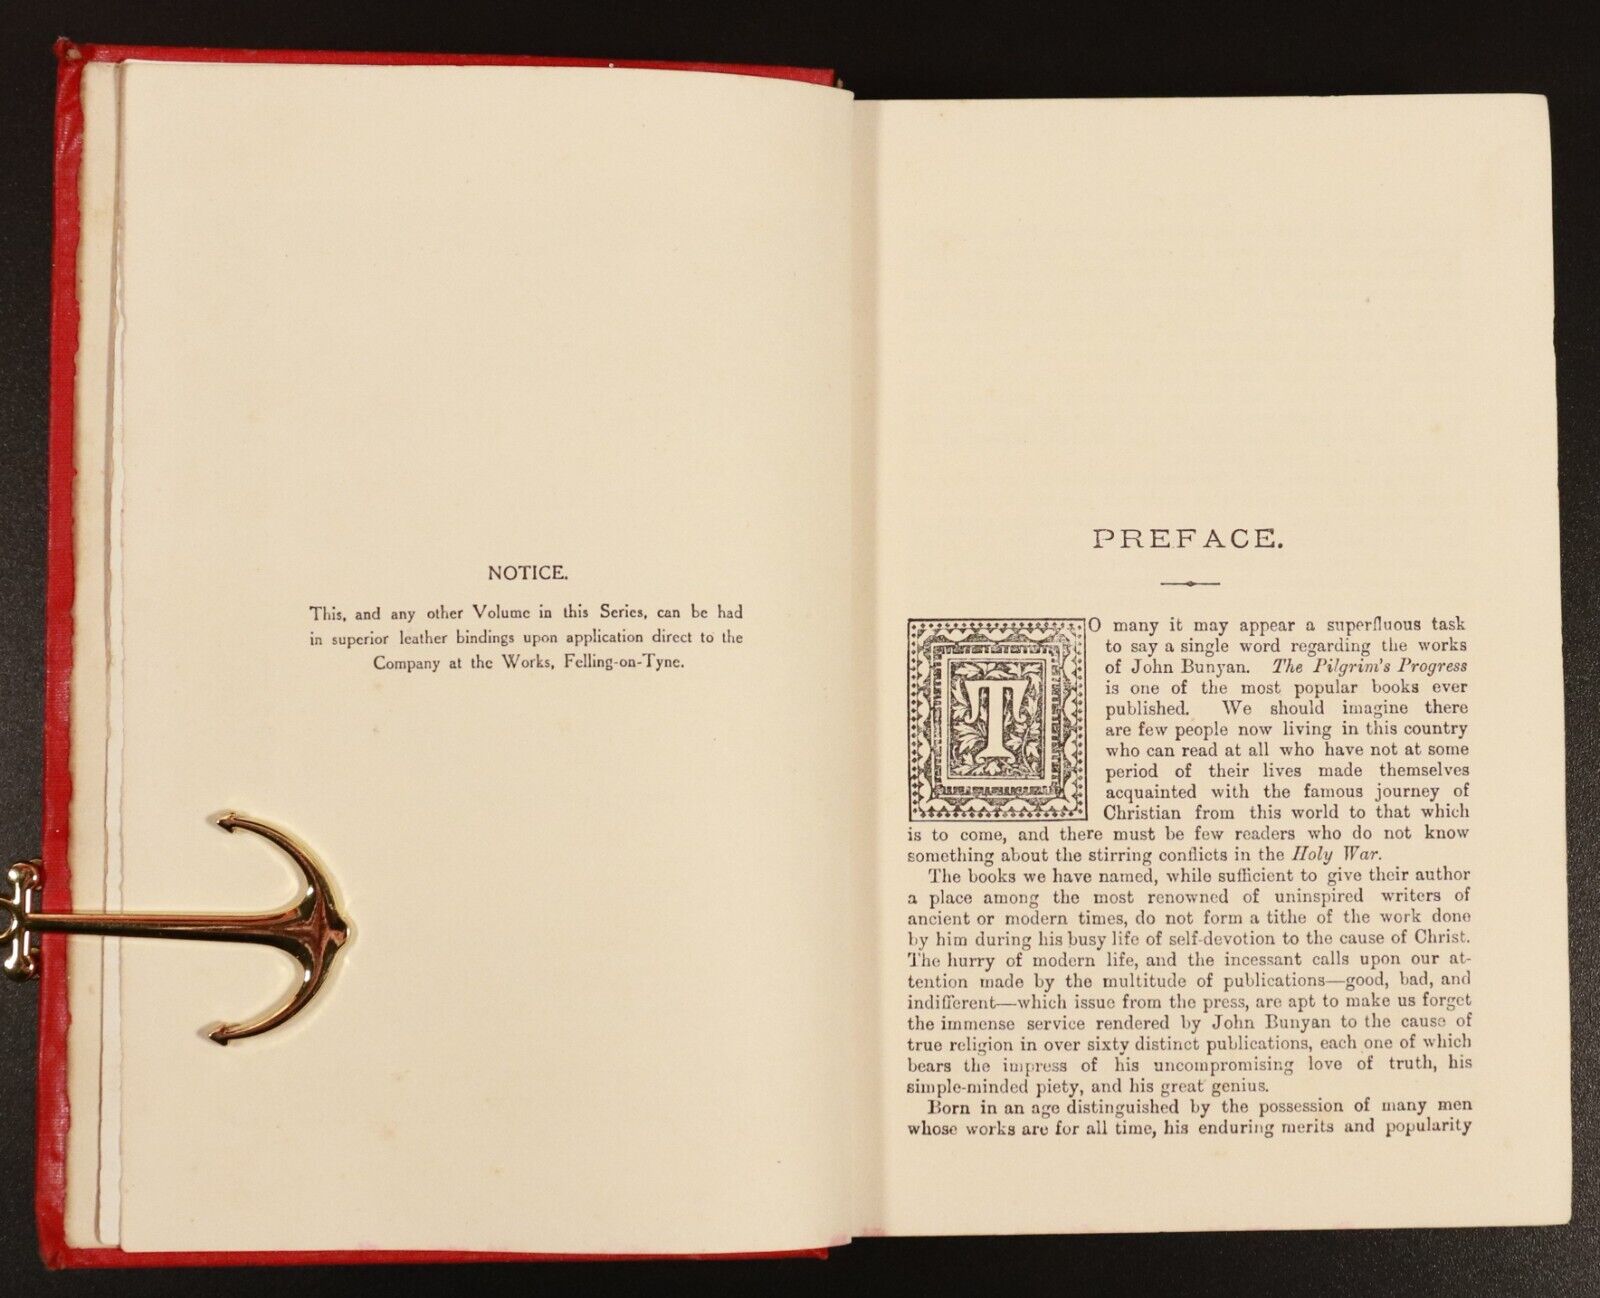 c1897 The Pilgrim's Progress & Holy War by John Bunyan Antique Theology Book